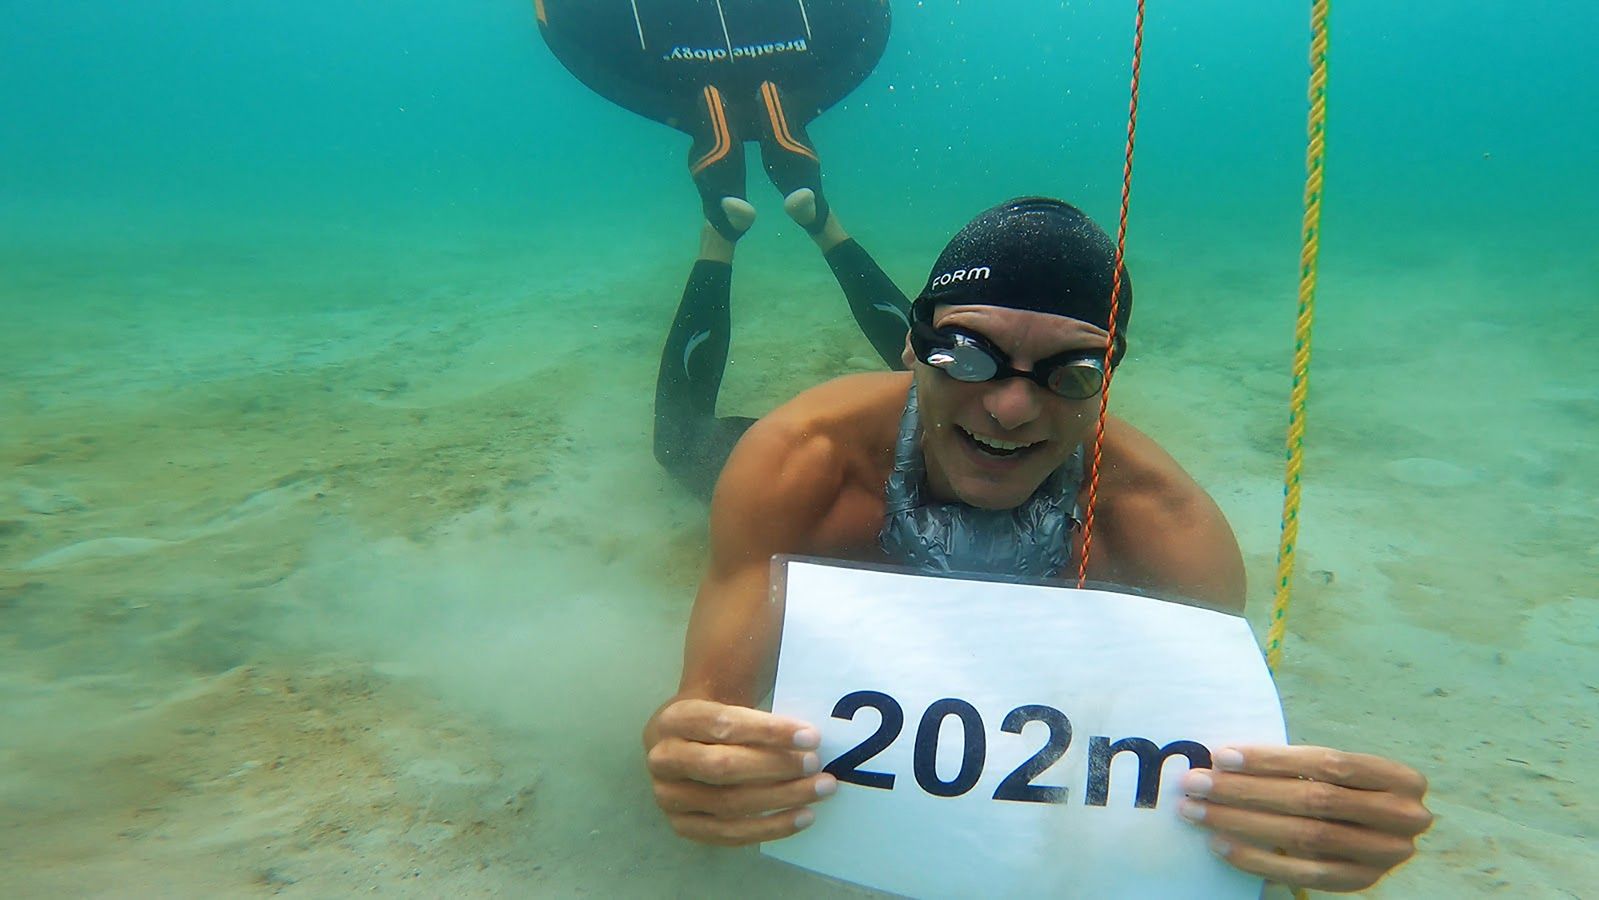 Stig Severinsen used just one breath to swim more than 200 meters underwater.